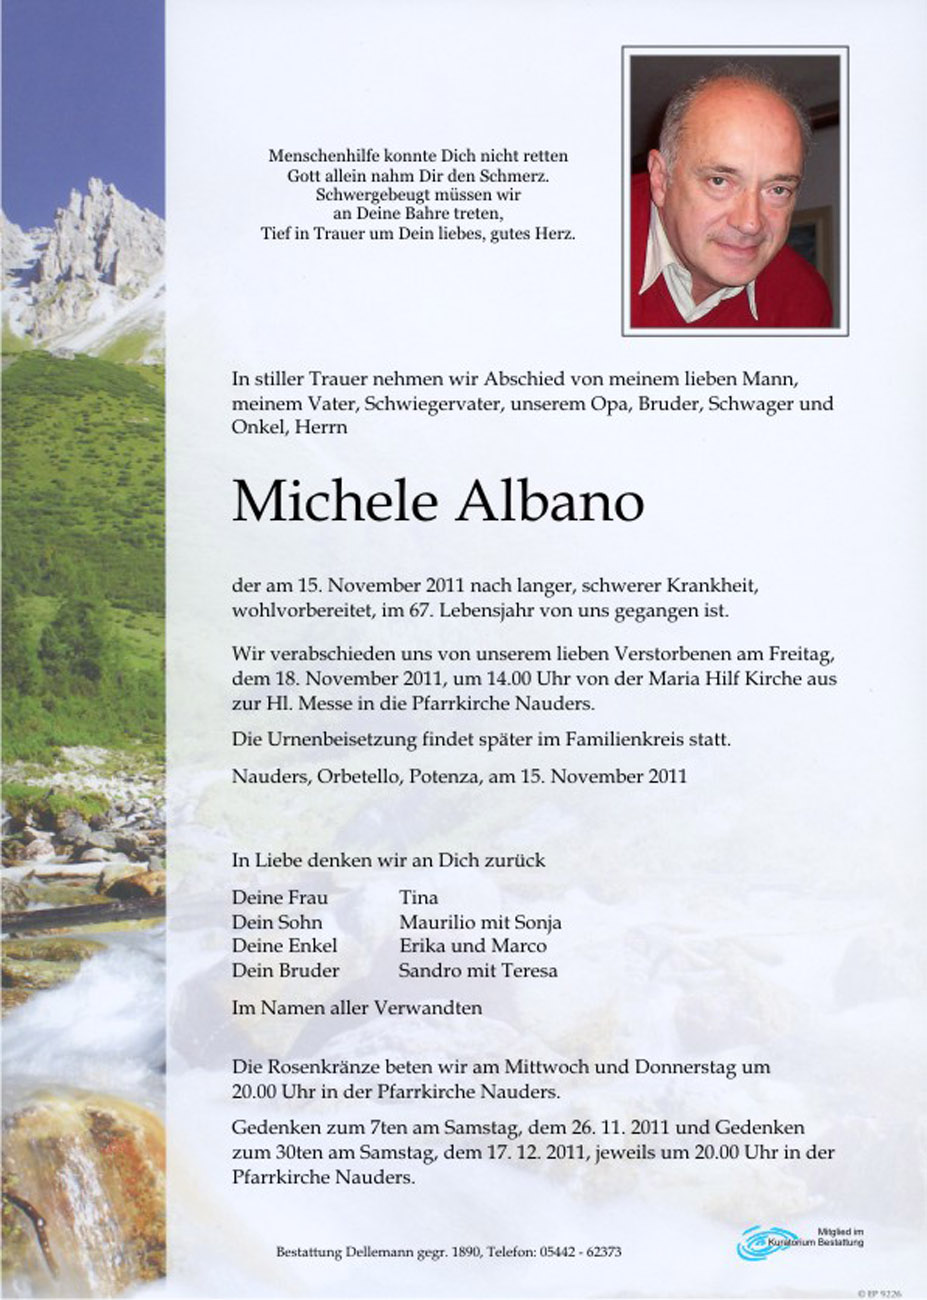   Michele Albano